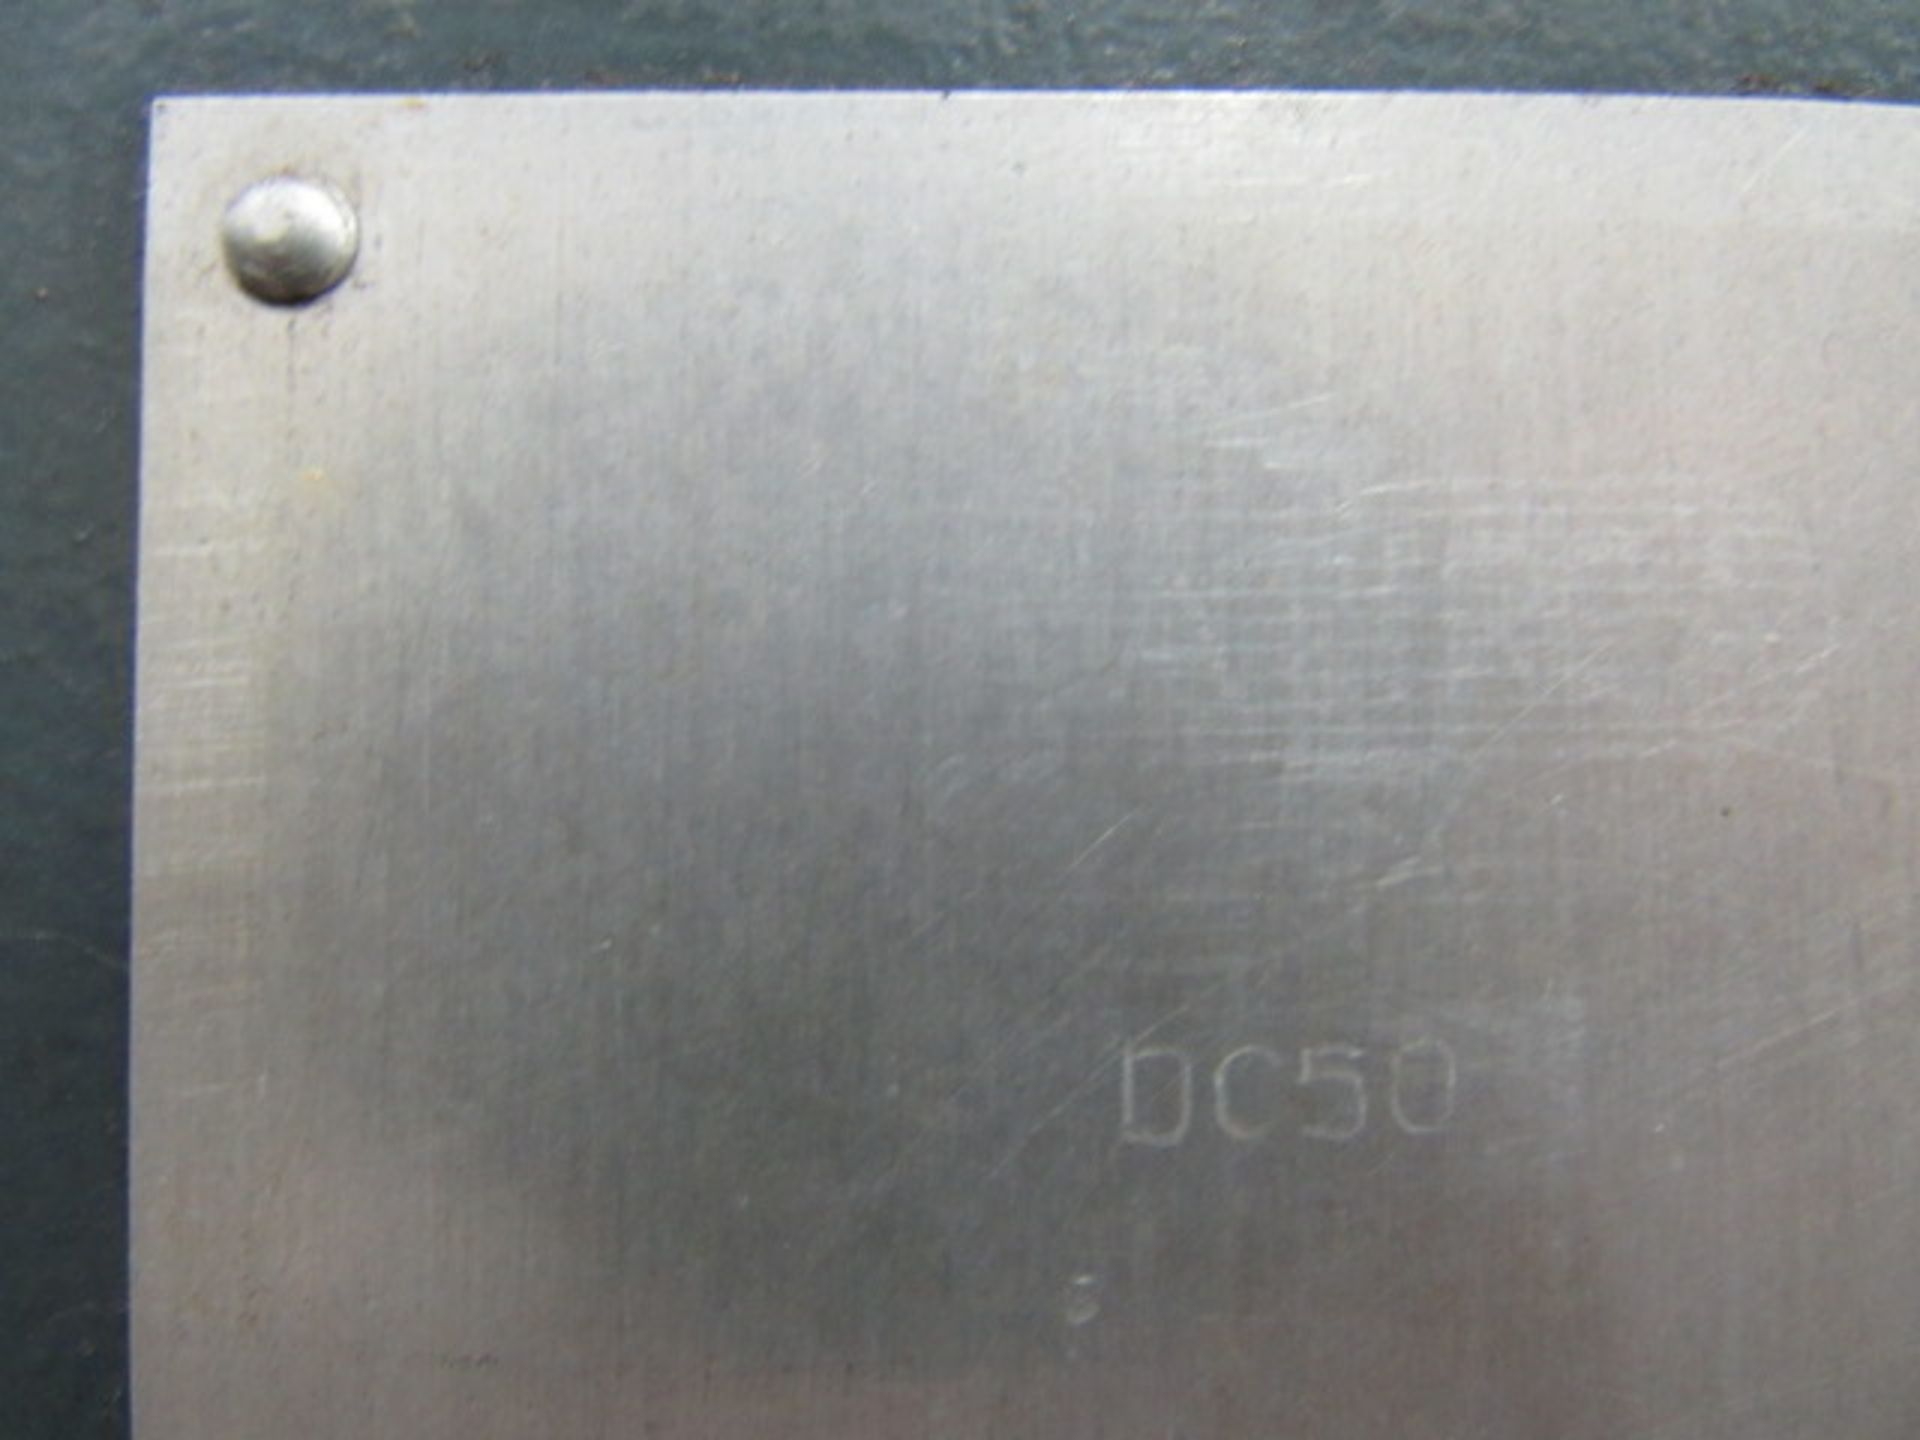 Infratirea DC-50 Drill - Image 4 of 6